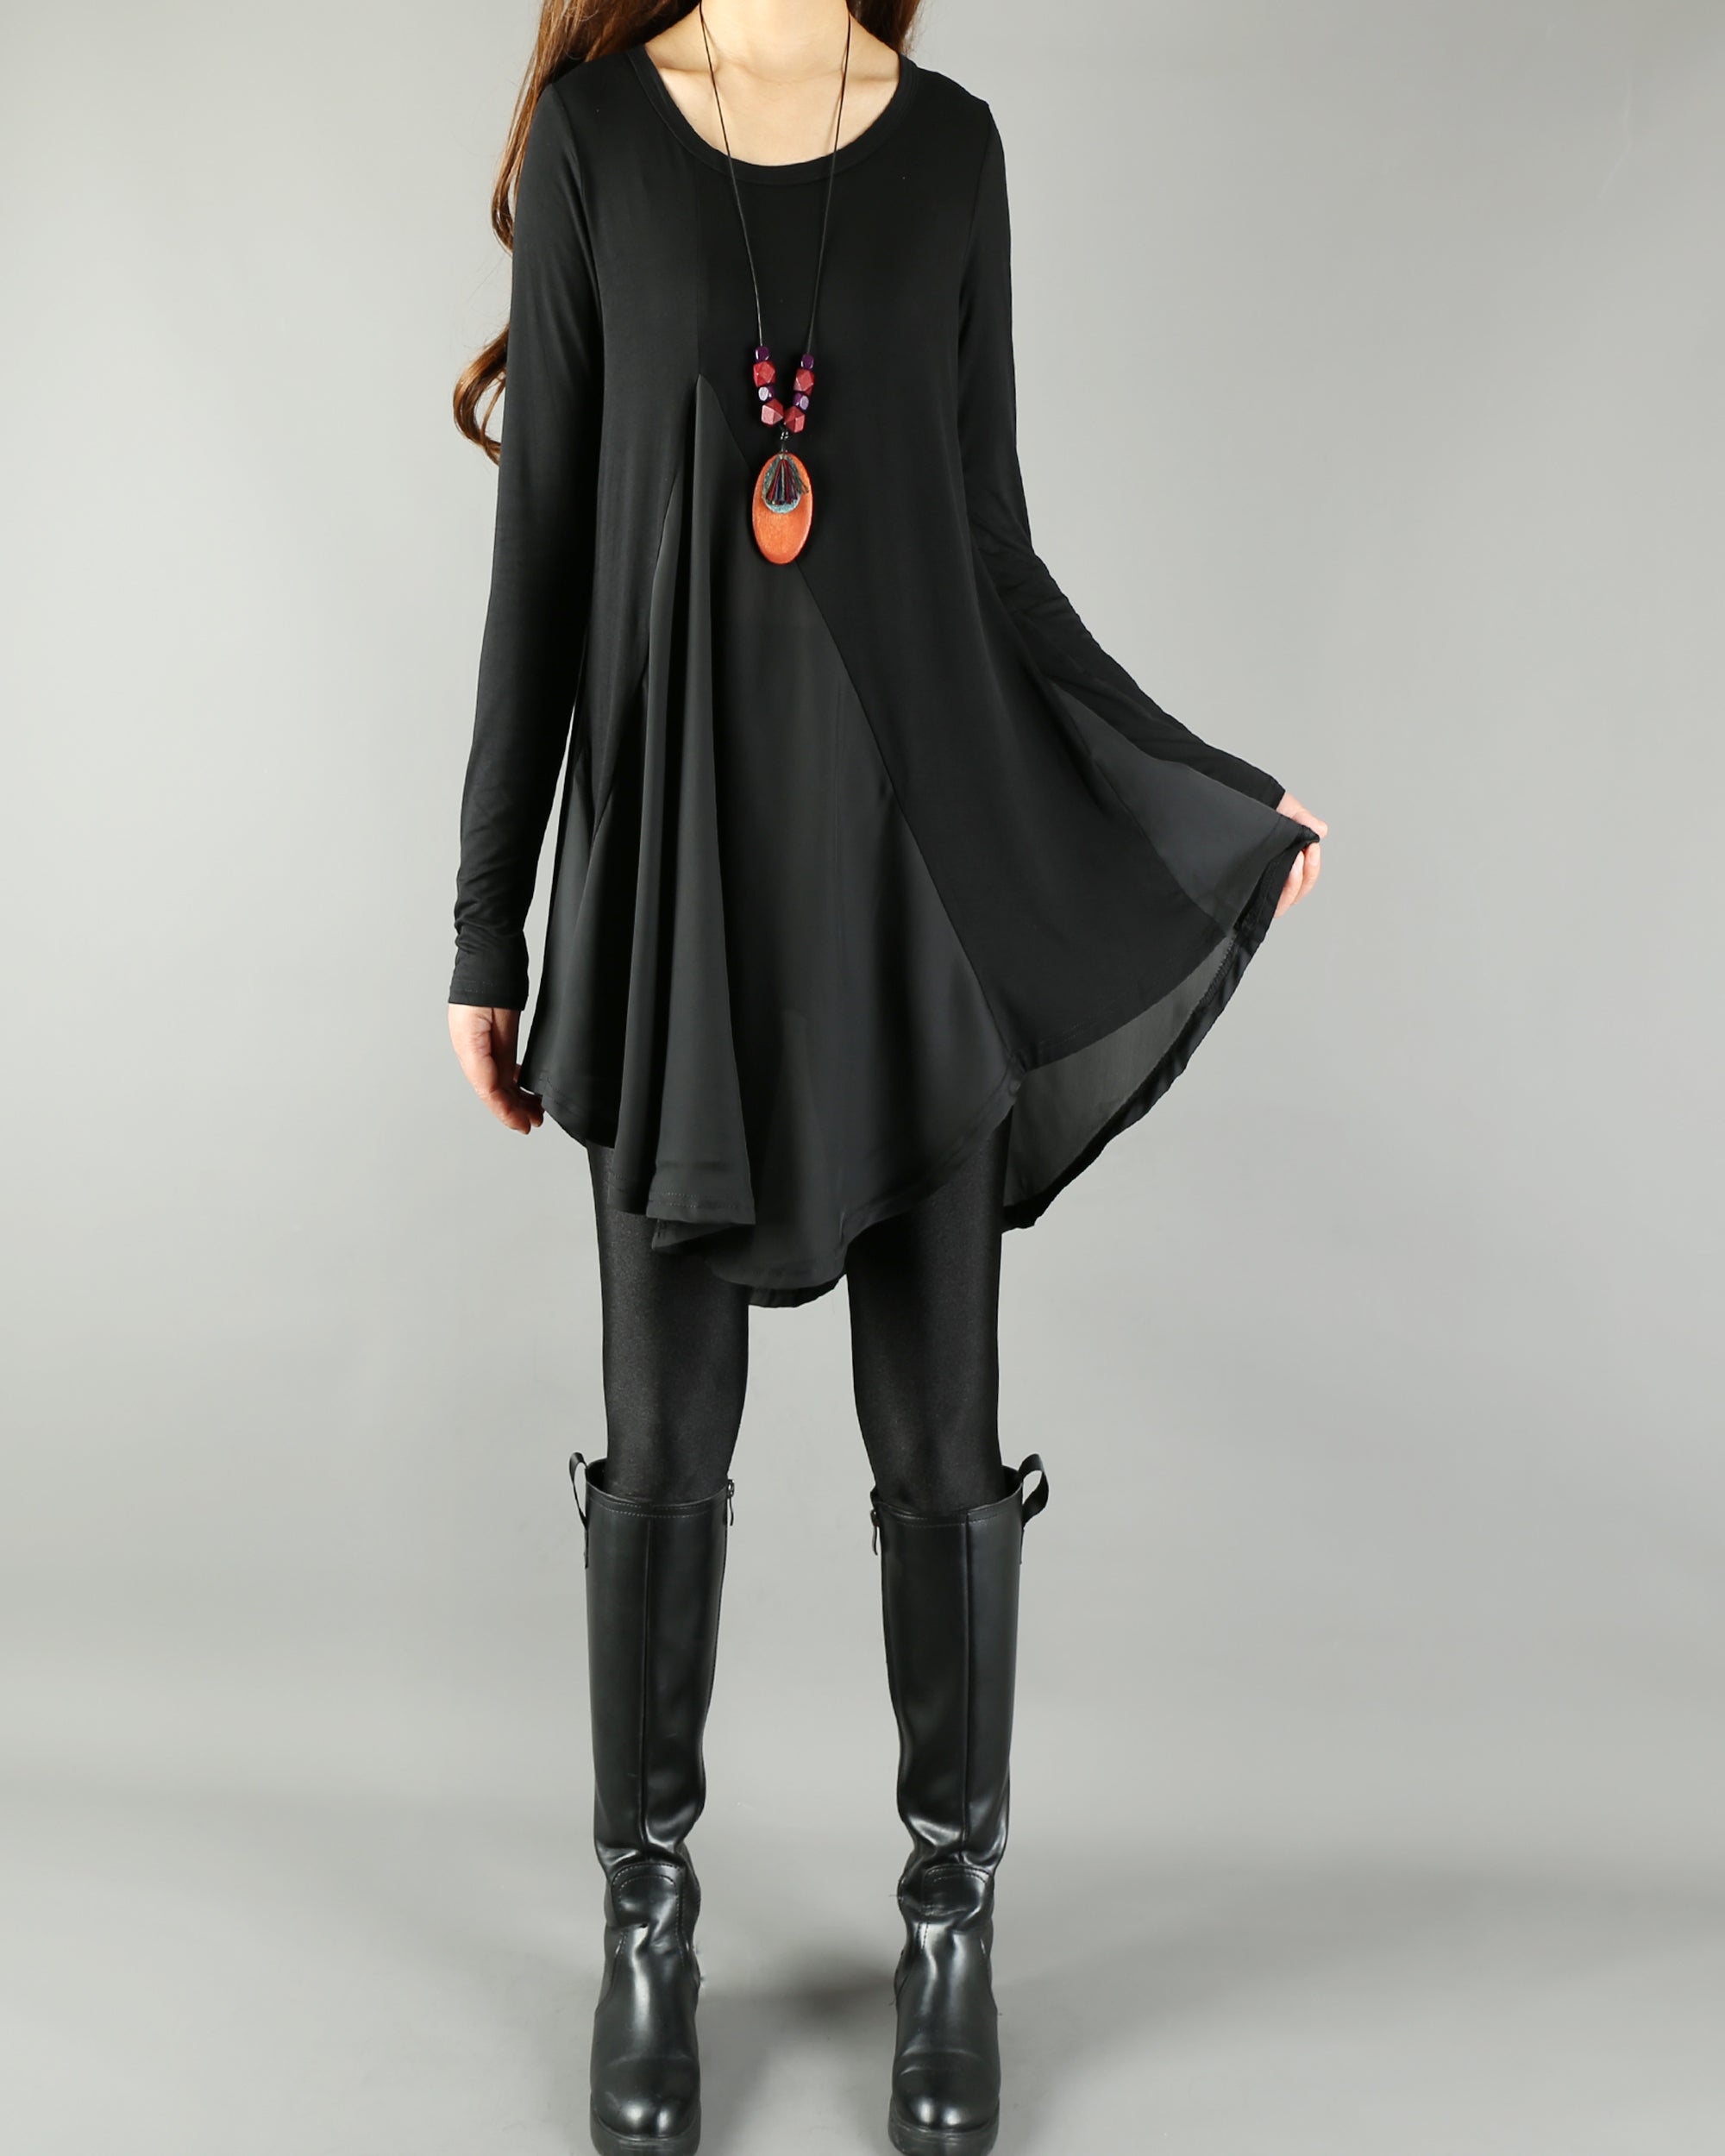 Women's Modal and Chiffon Tunic Dress/Modal Top/Chiffon Tunic